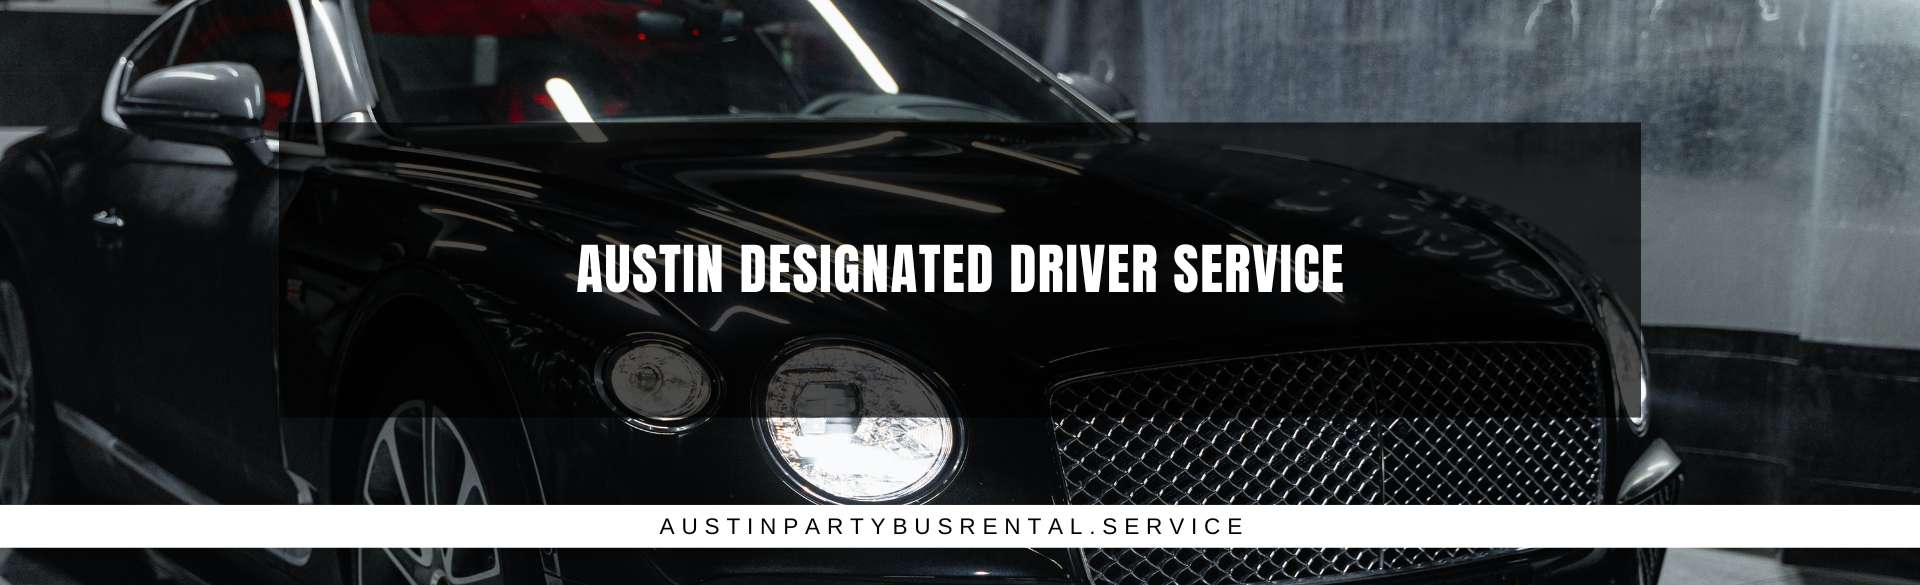 Austin Designated Driver Service